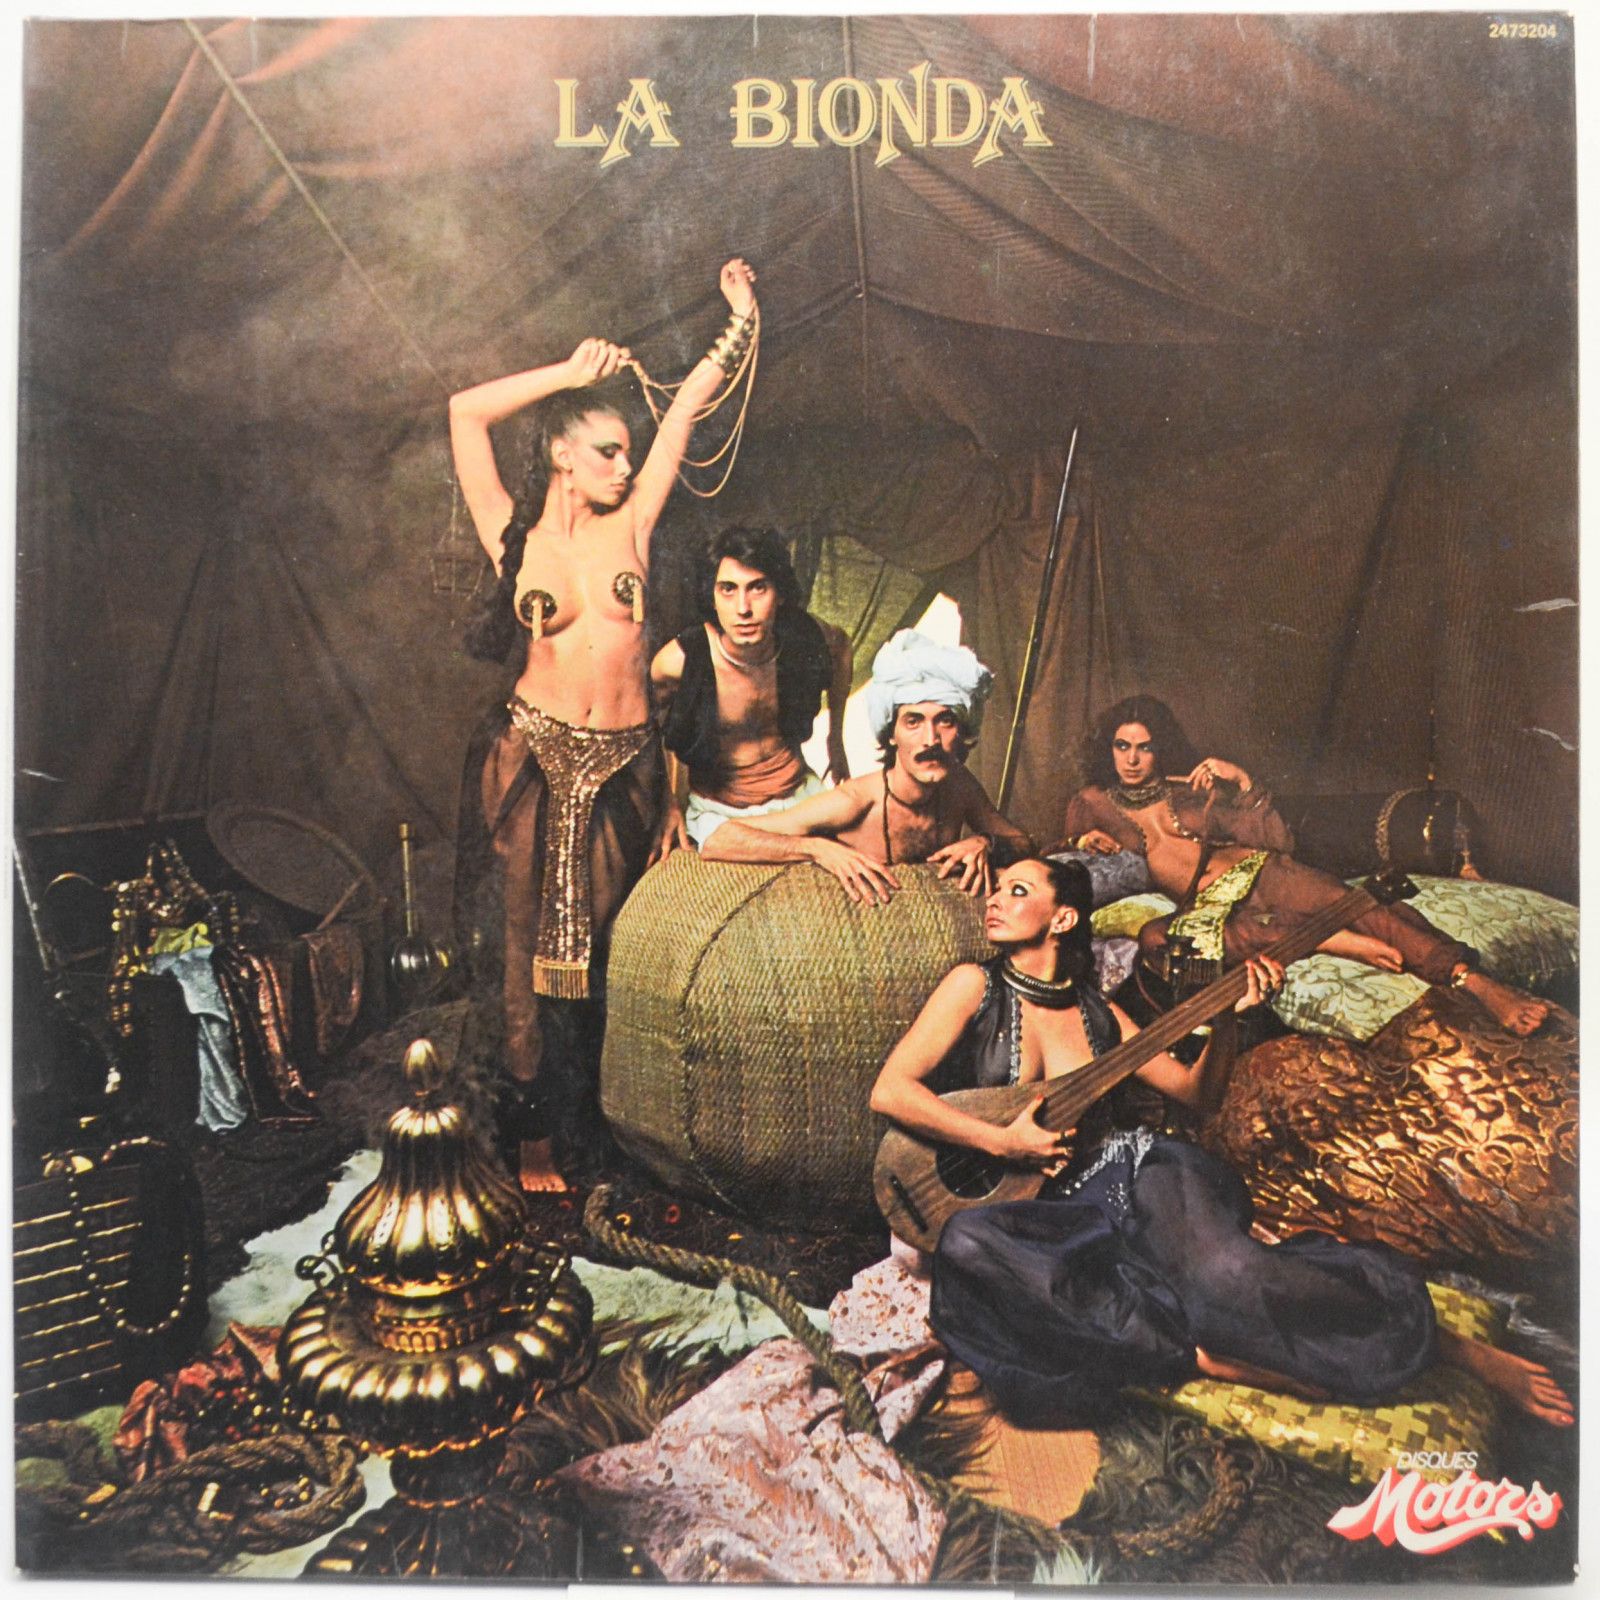 La Bionda — La Bionda (France), 1978